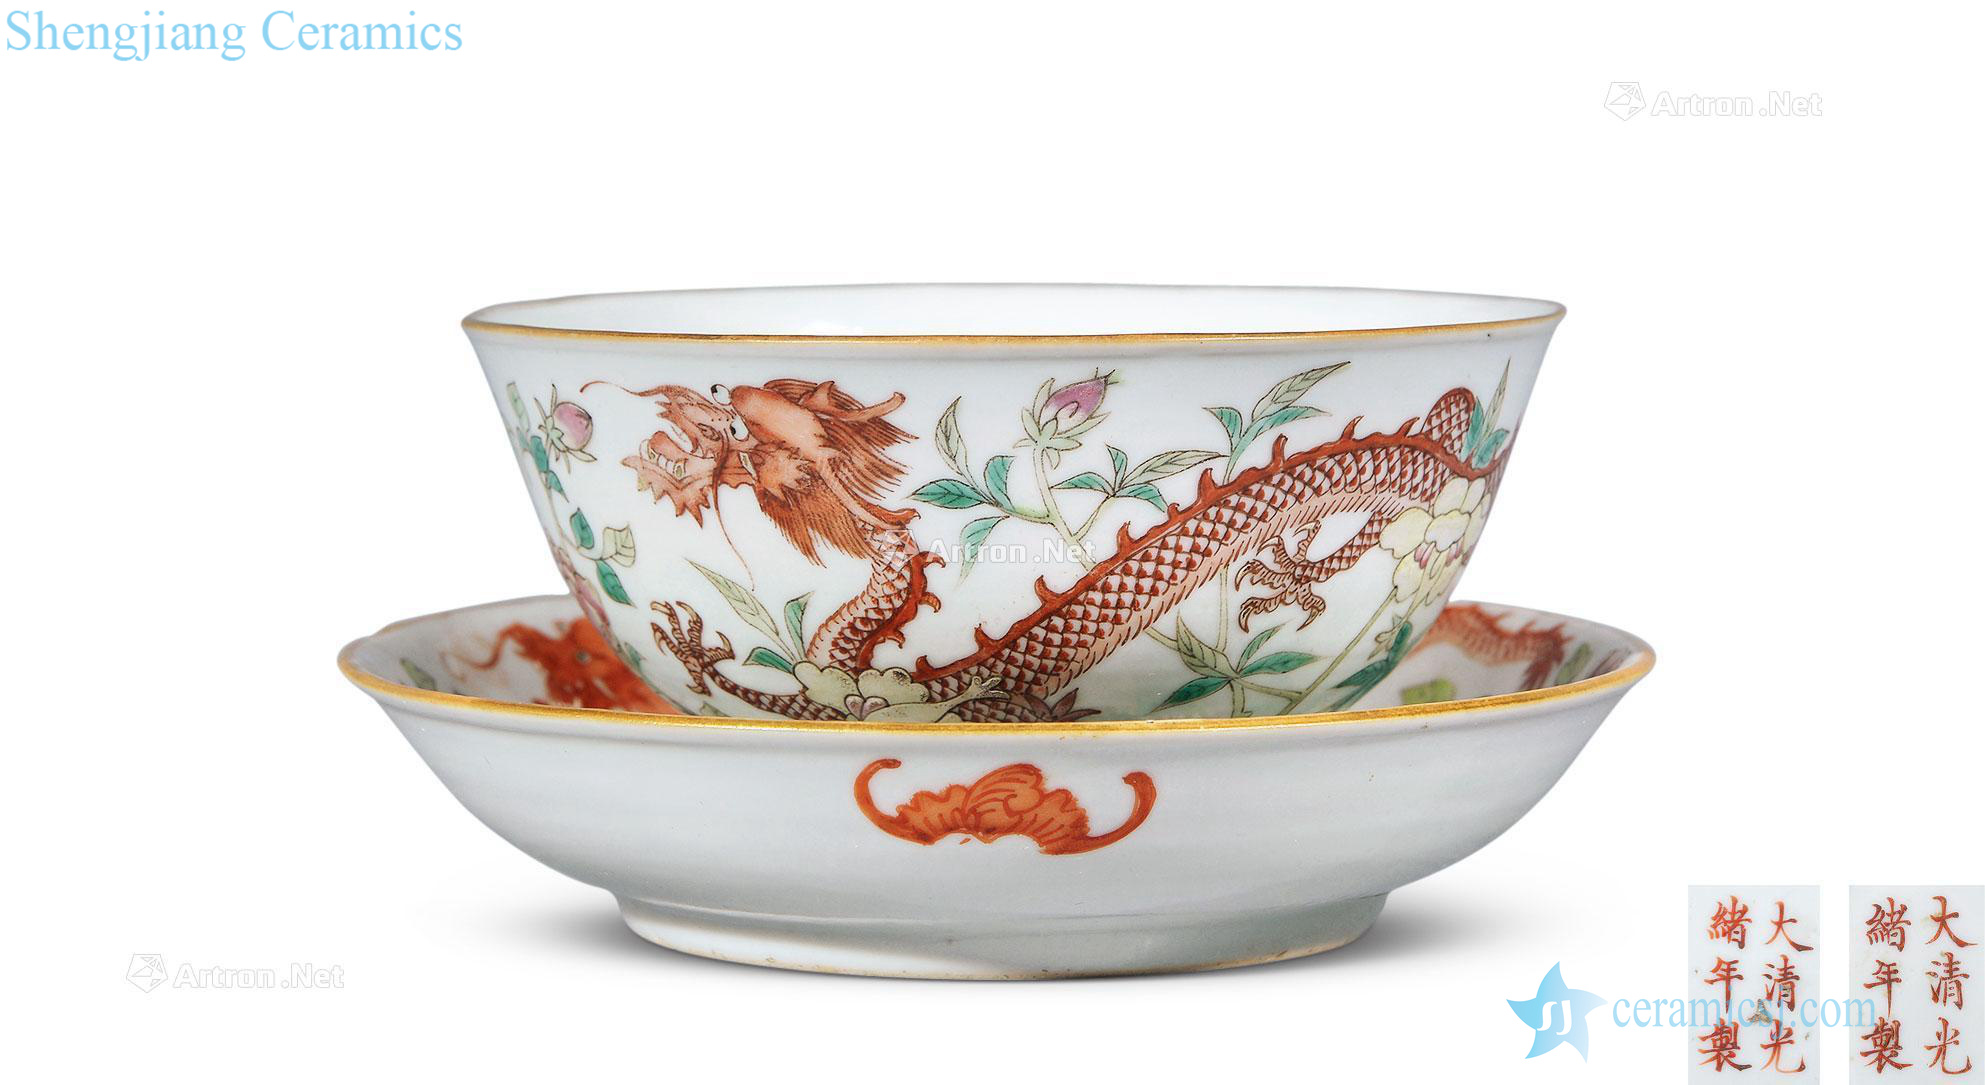 Pastel reign of qing emperor guangxu wear flower dragon plate, bowl